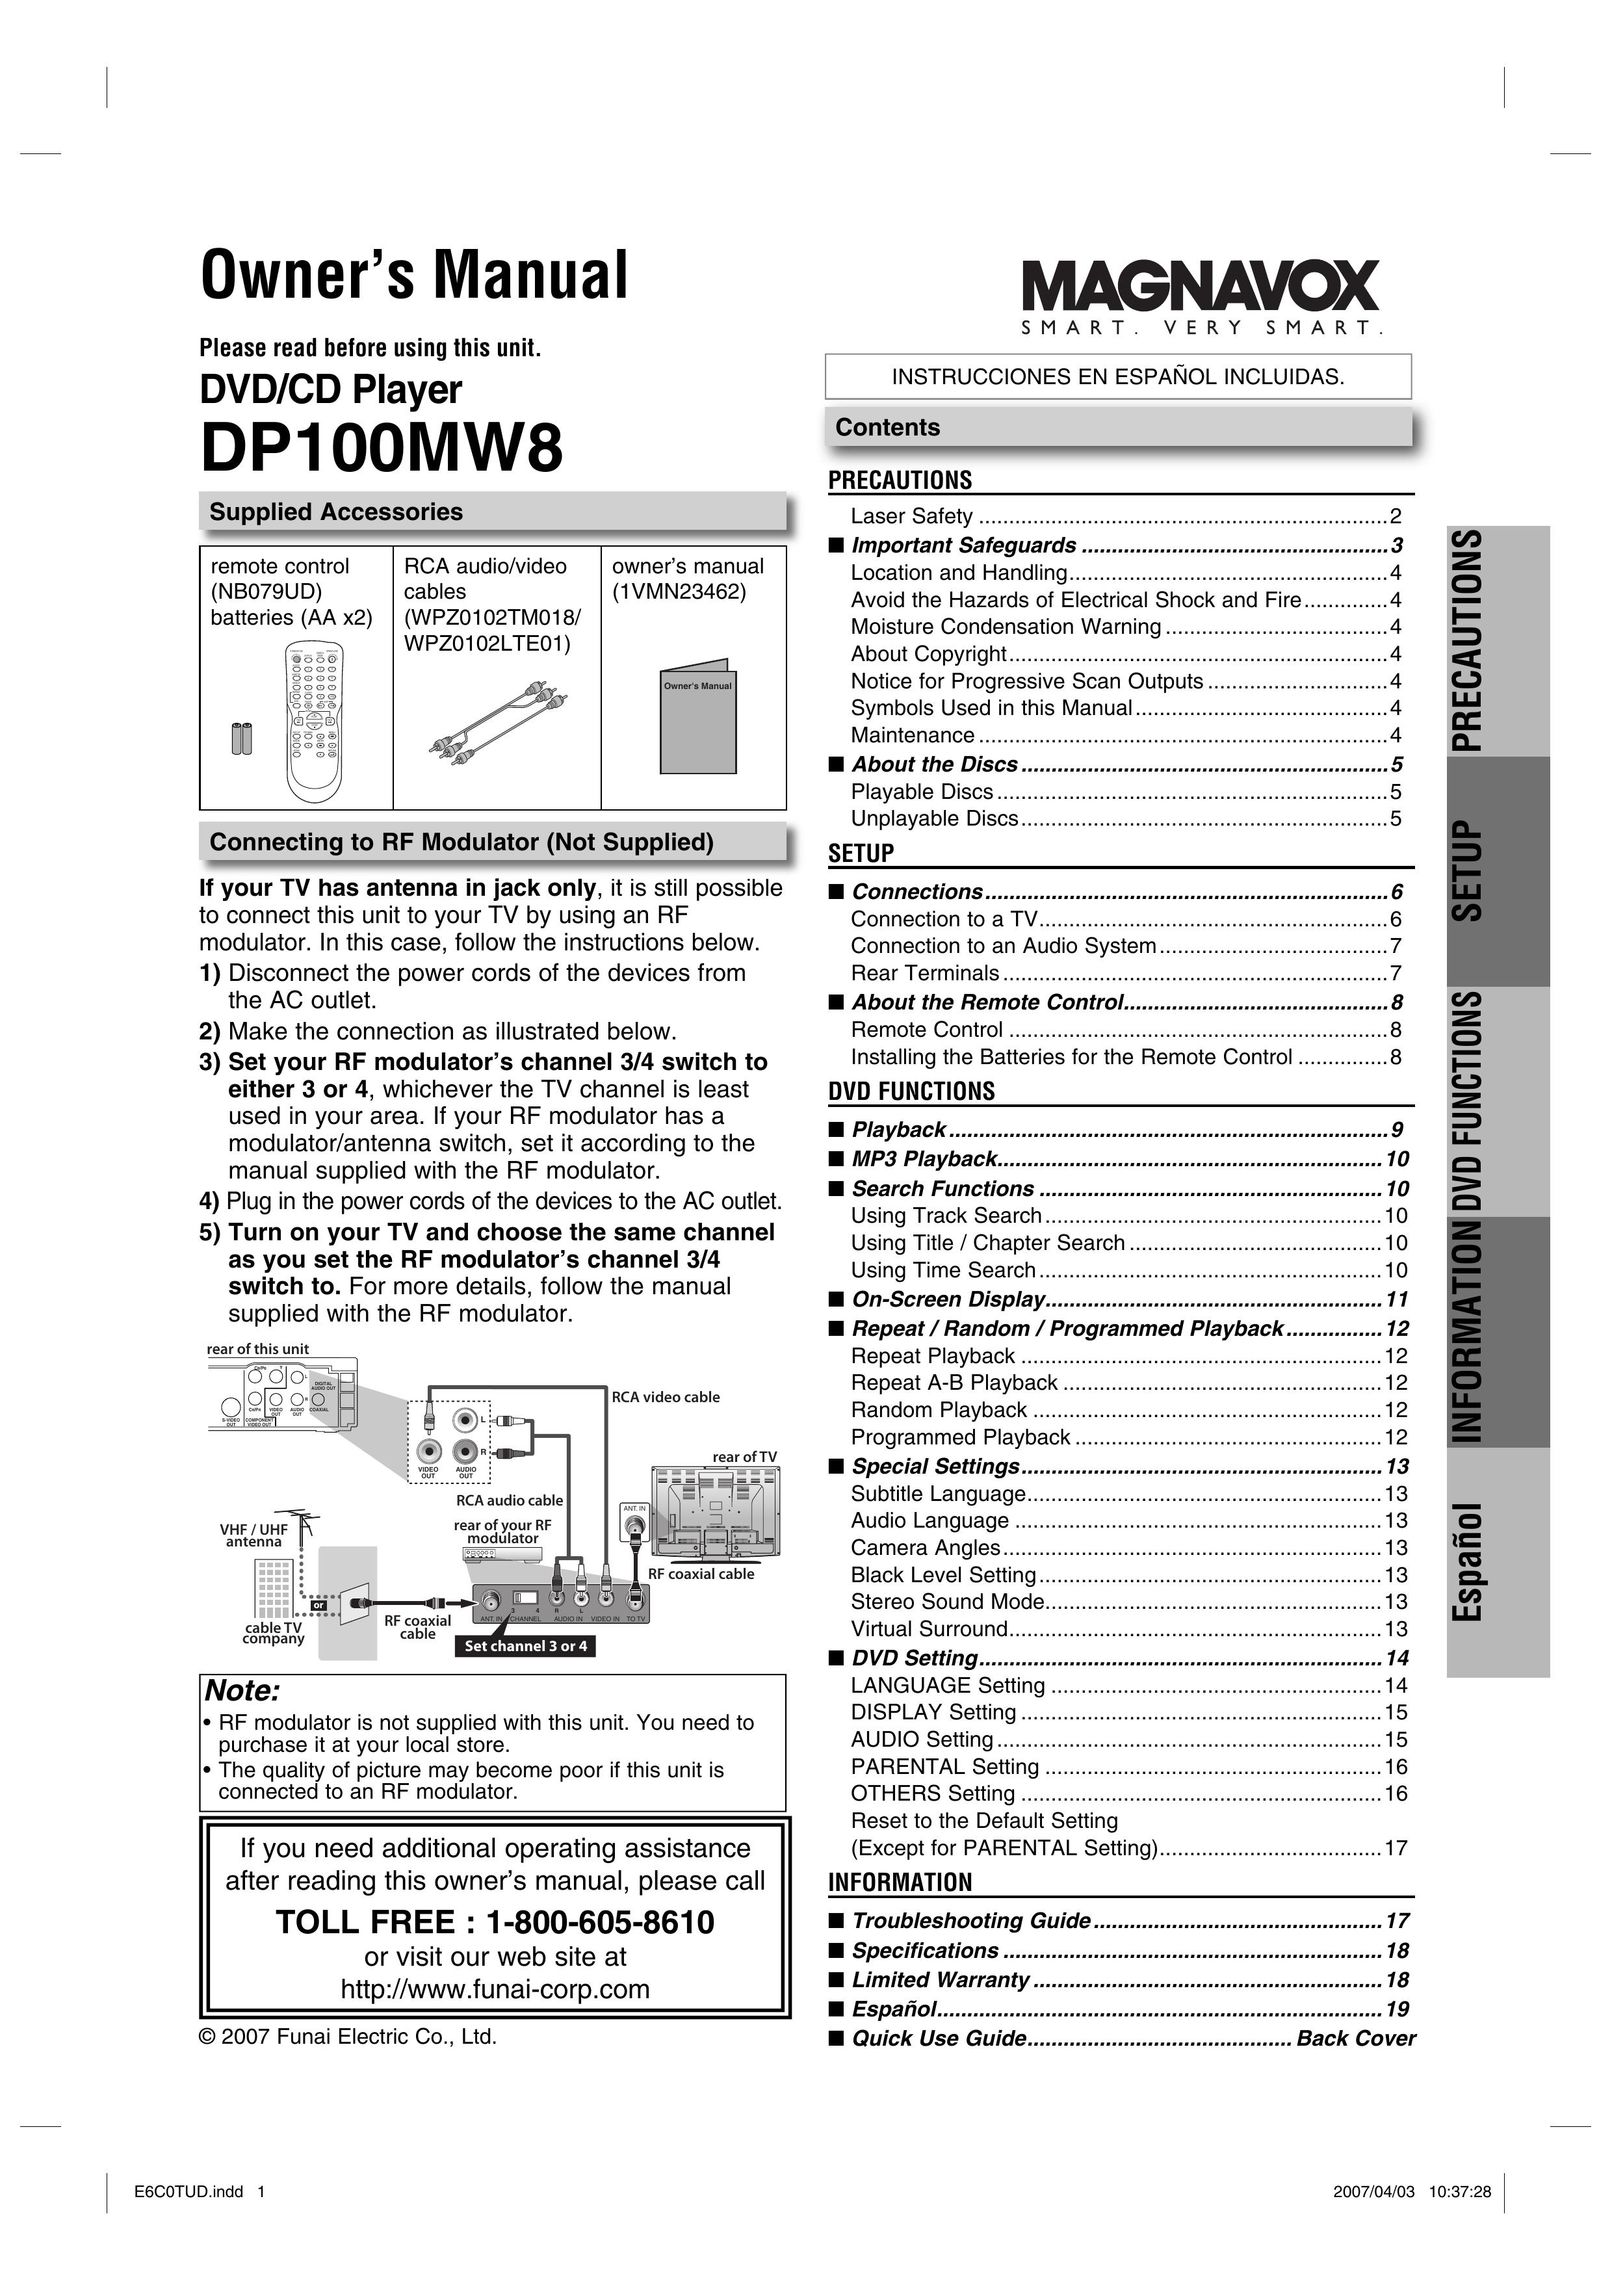 Magnavox DP100MW8 DVD Player User Manual